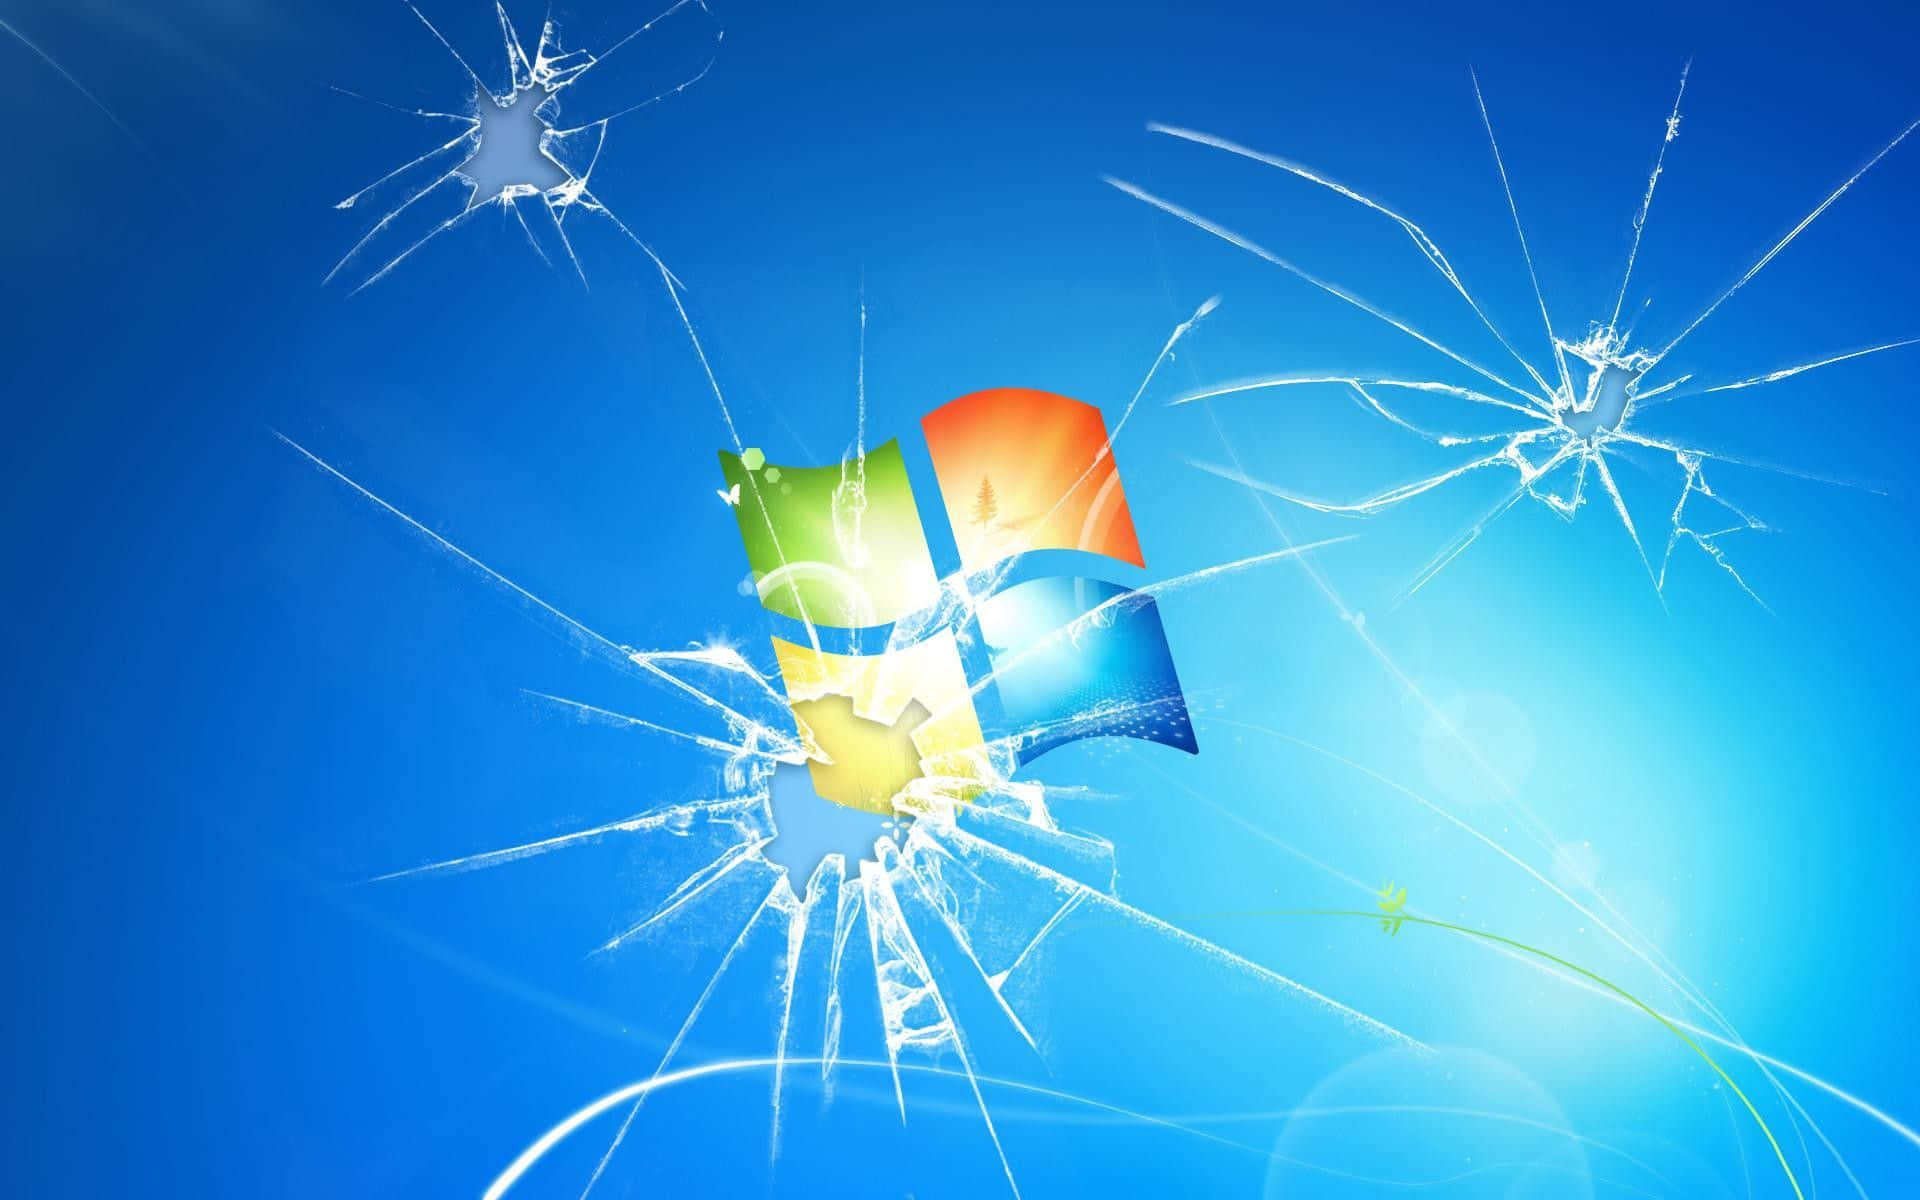 Cracked Screen Windows Wallpaper.jpg Wallpaper